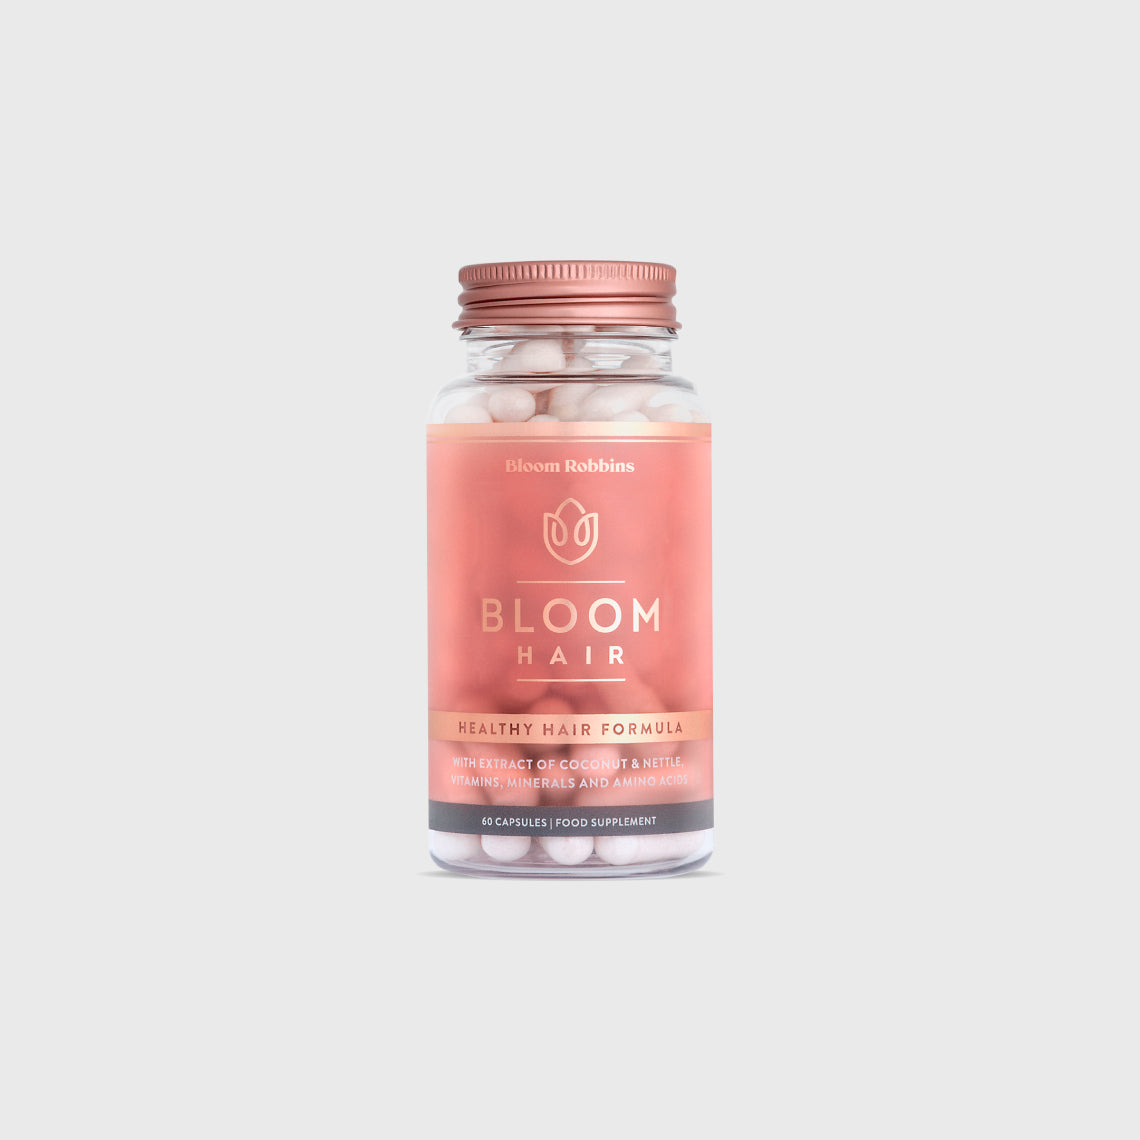 Bloom Hair vitamins - Retro edition